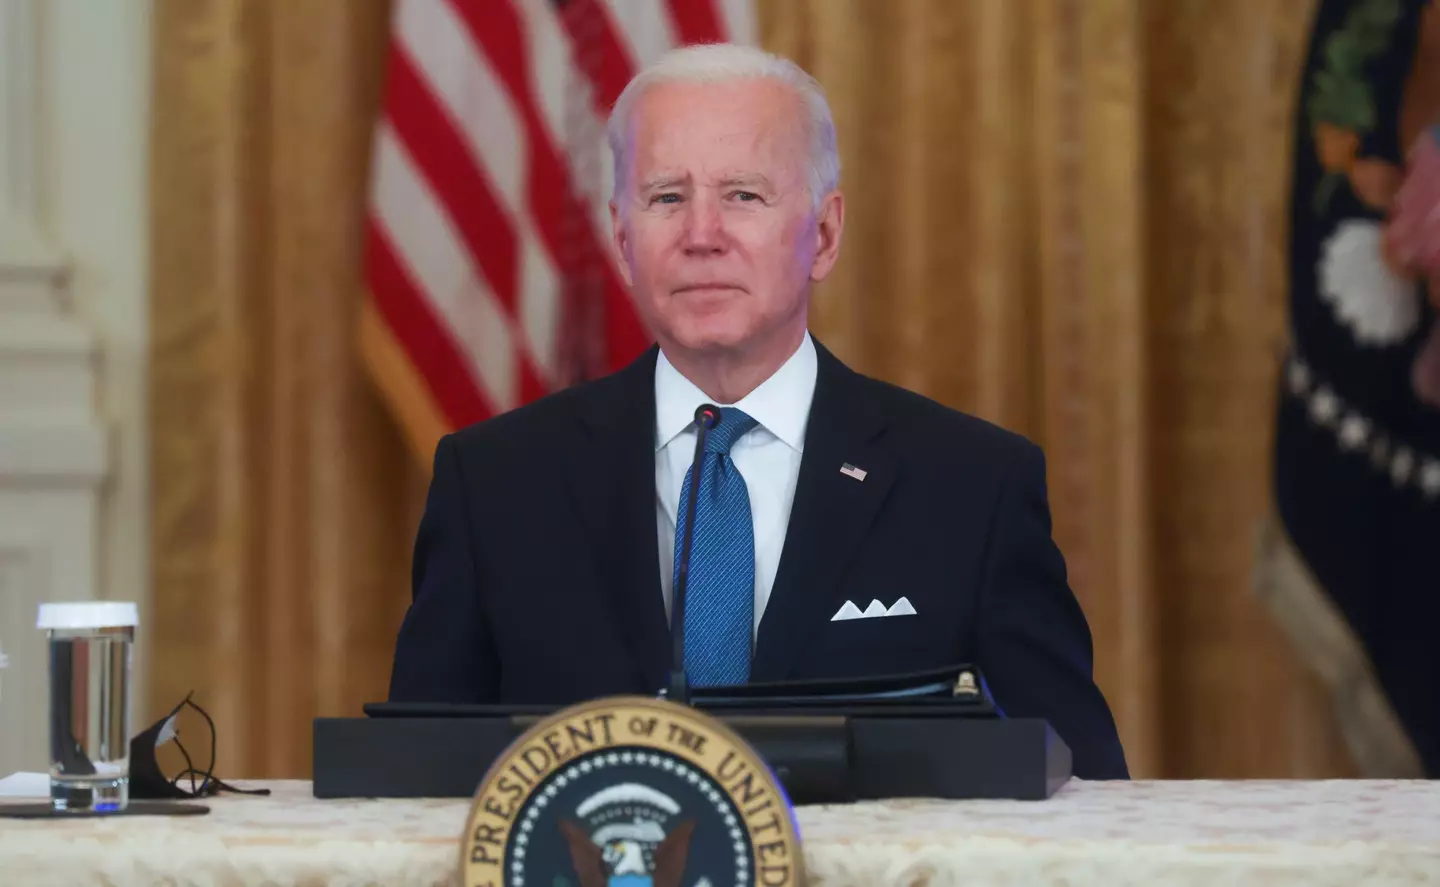 President Joe Biden calls Peter Doocy after making a comment about the journalist.